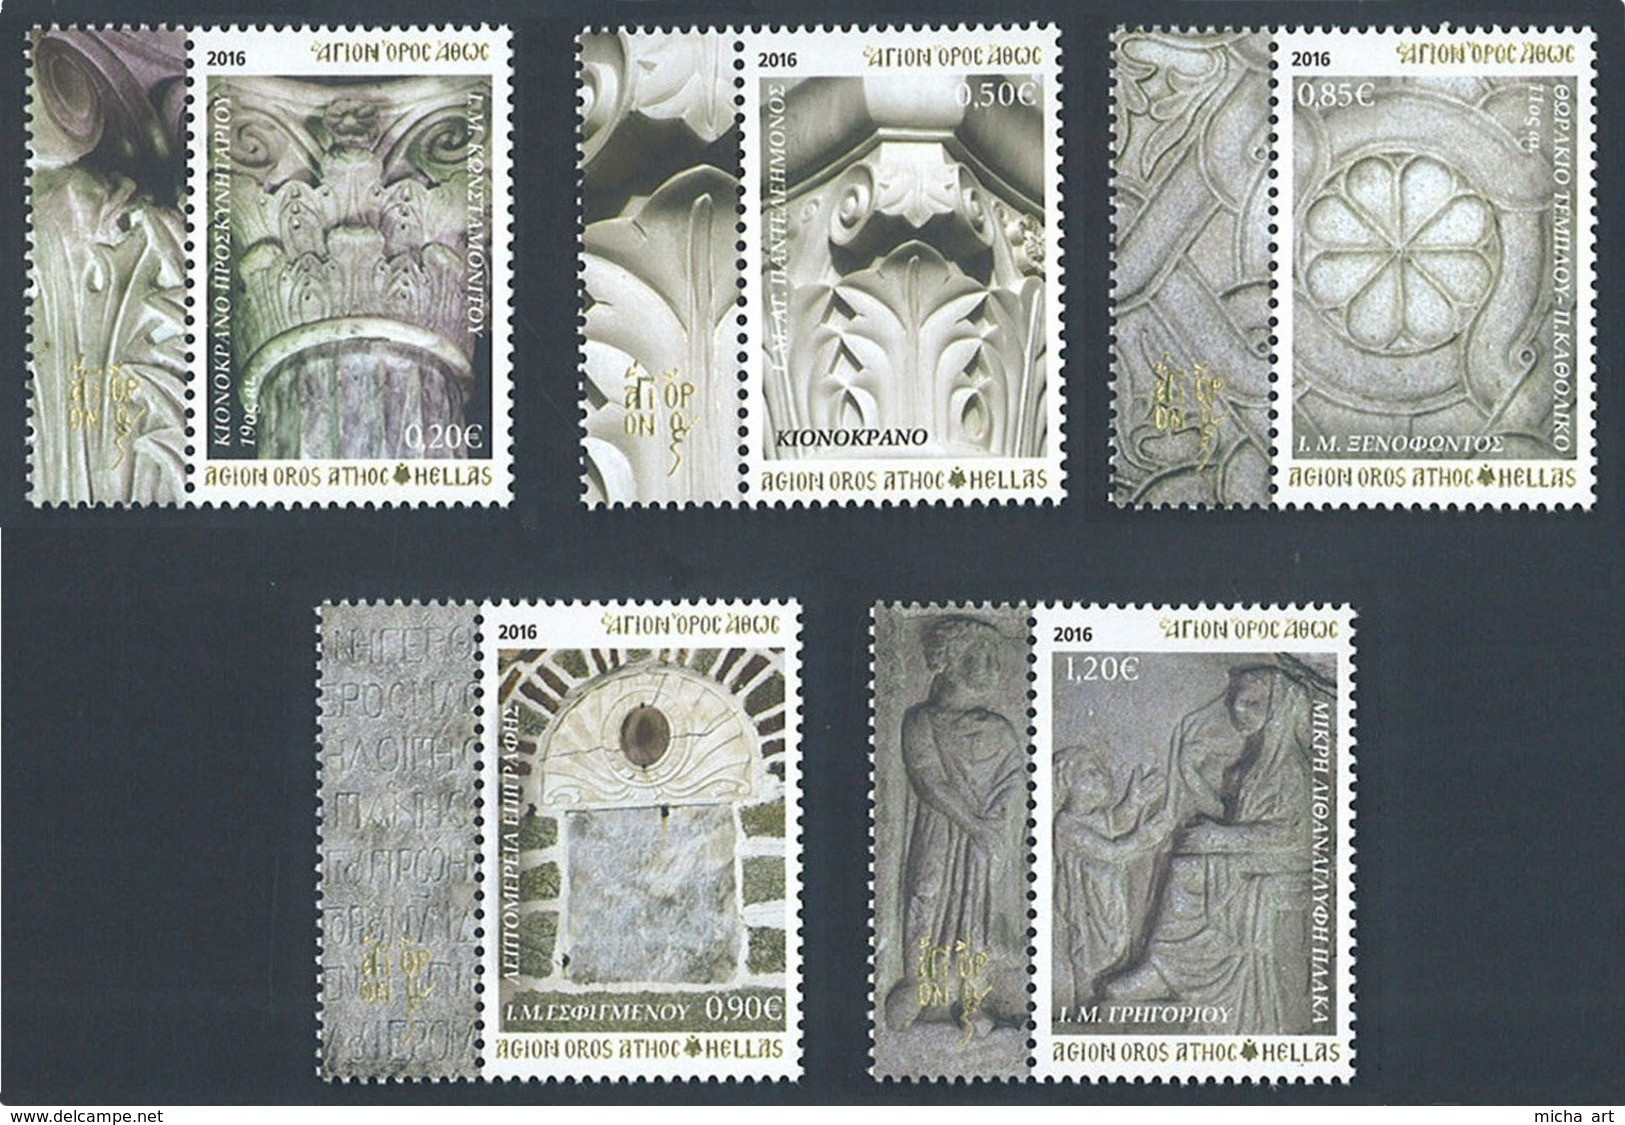 Greece 2016 Agion Oros Mount Athos - Stone Reliefs D - Issue IV - Set MNH - Ongebruikt